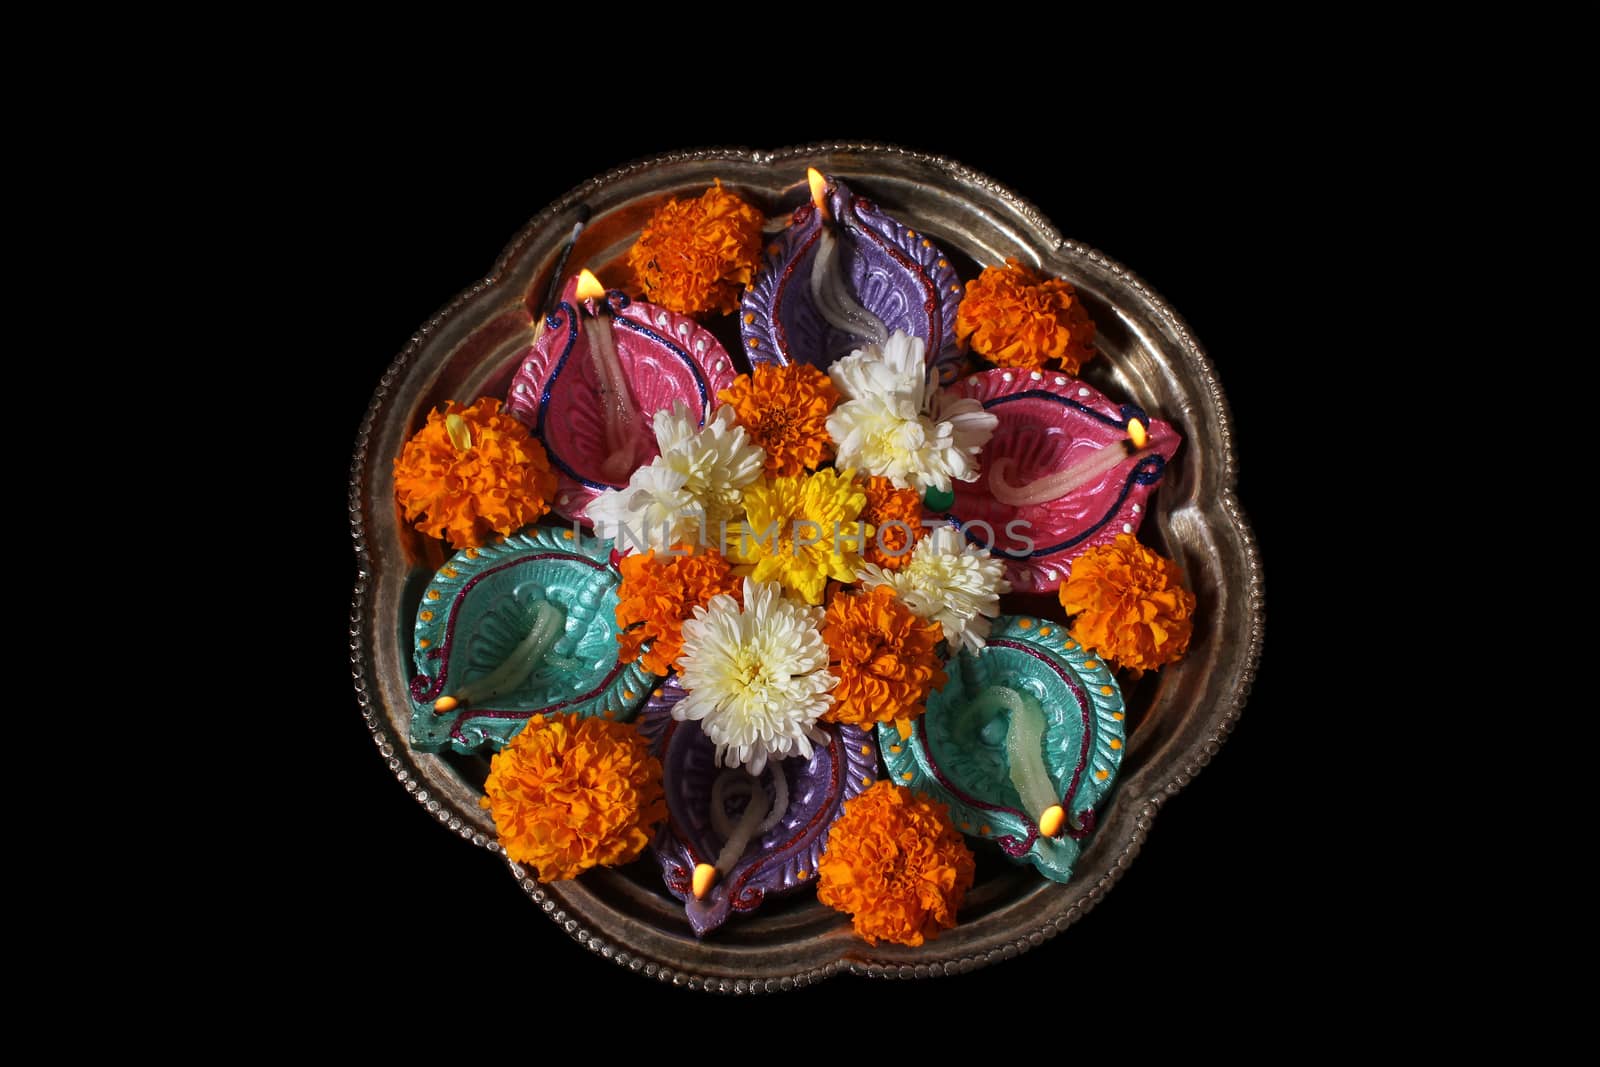 Hindu Ritual Plate in Diwali by thefinalmiracle